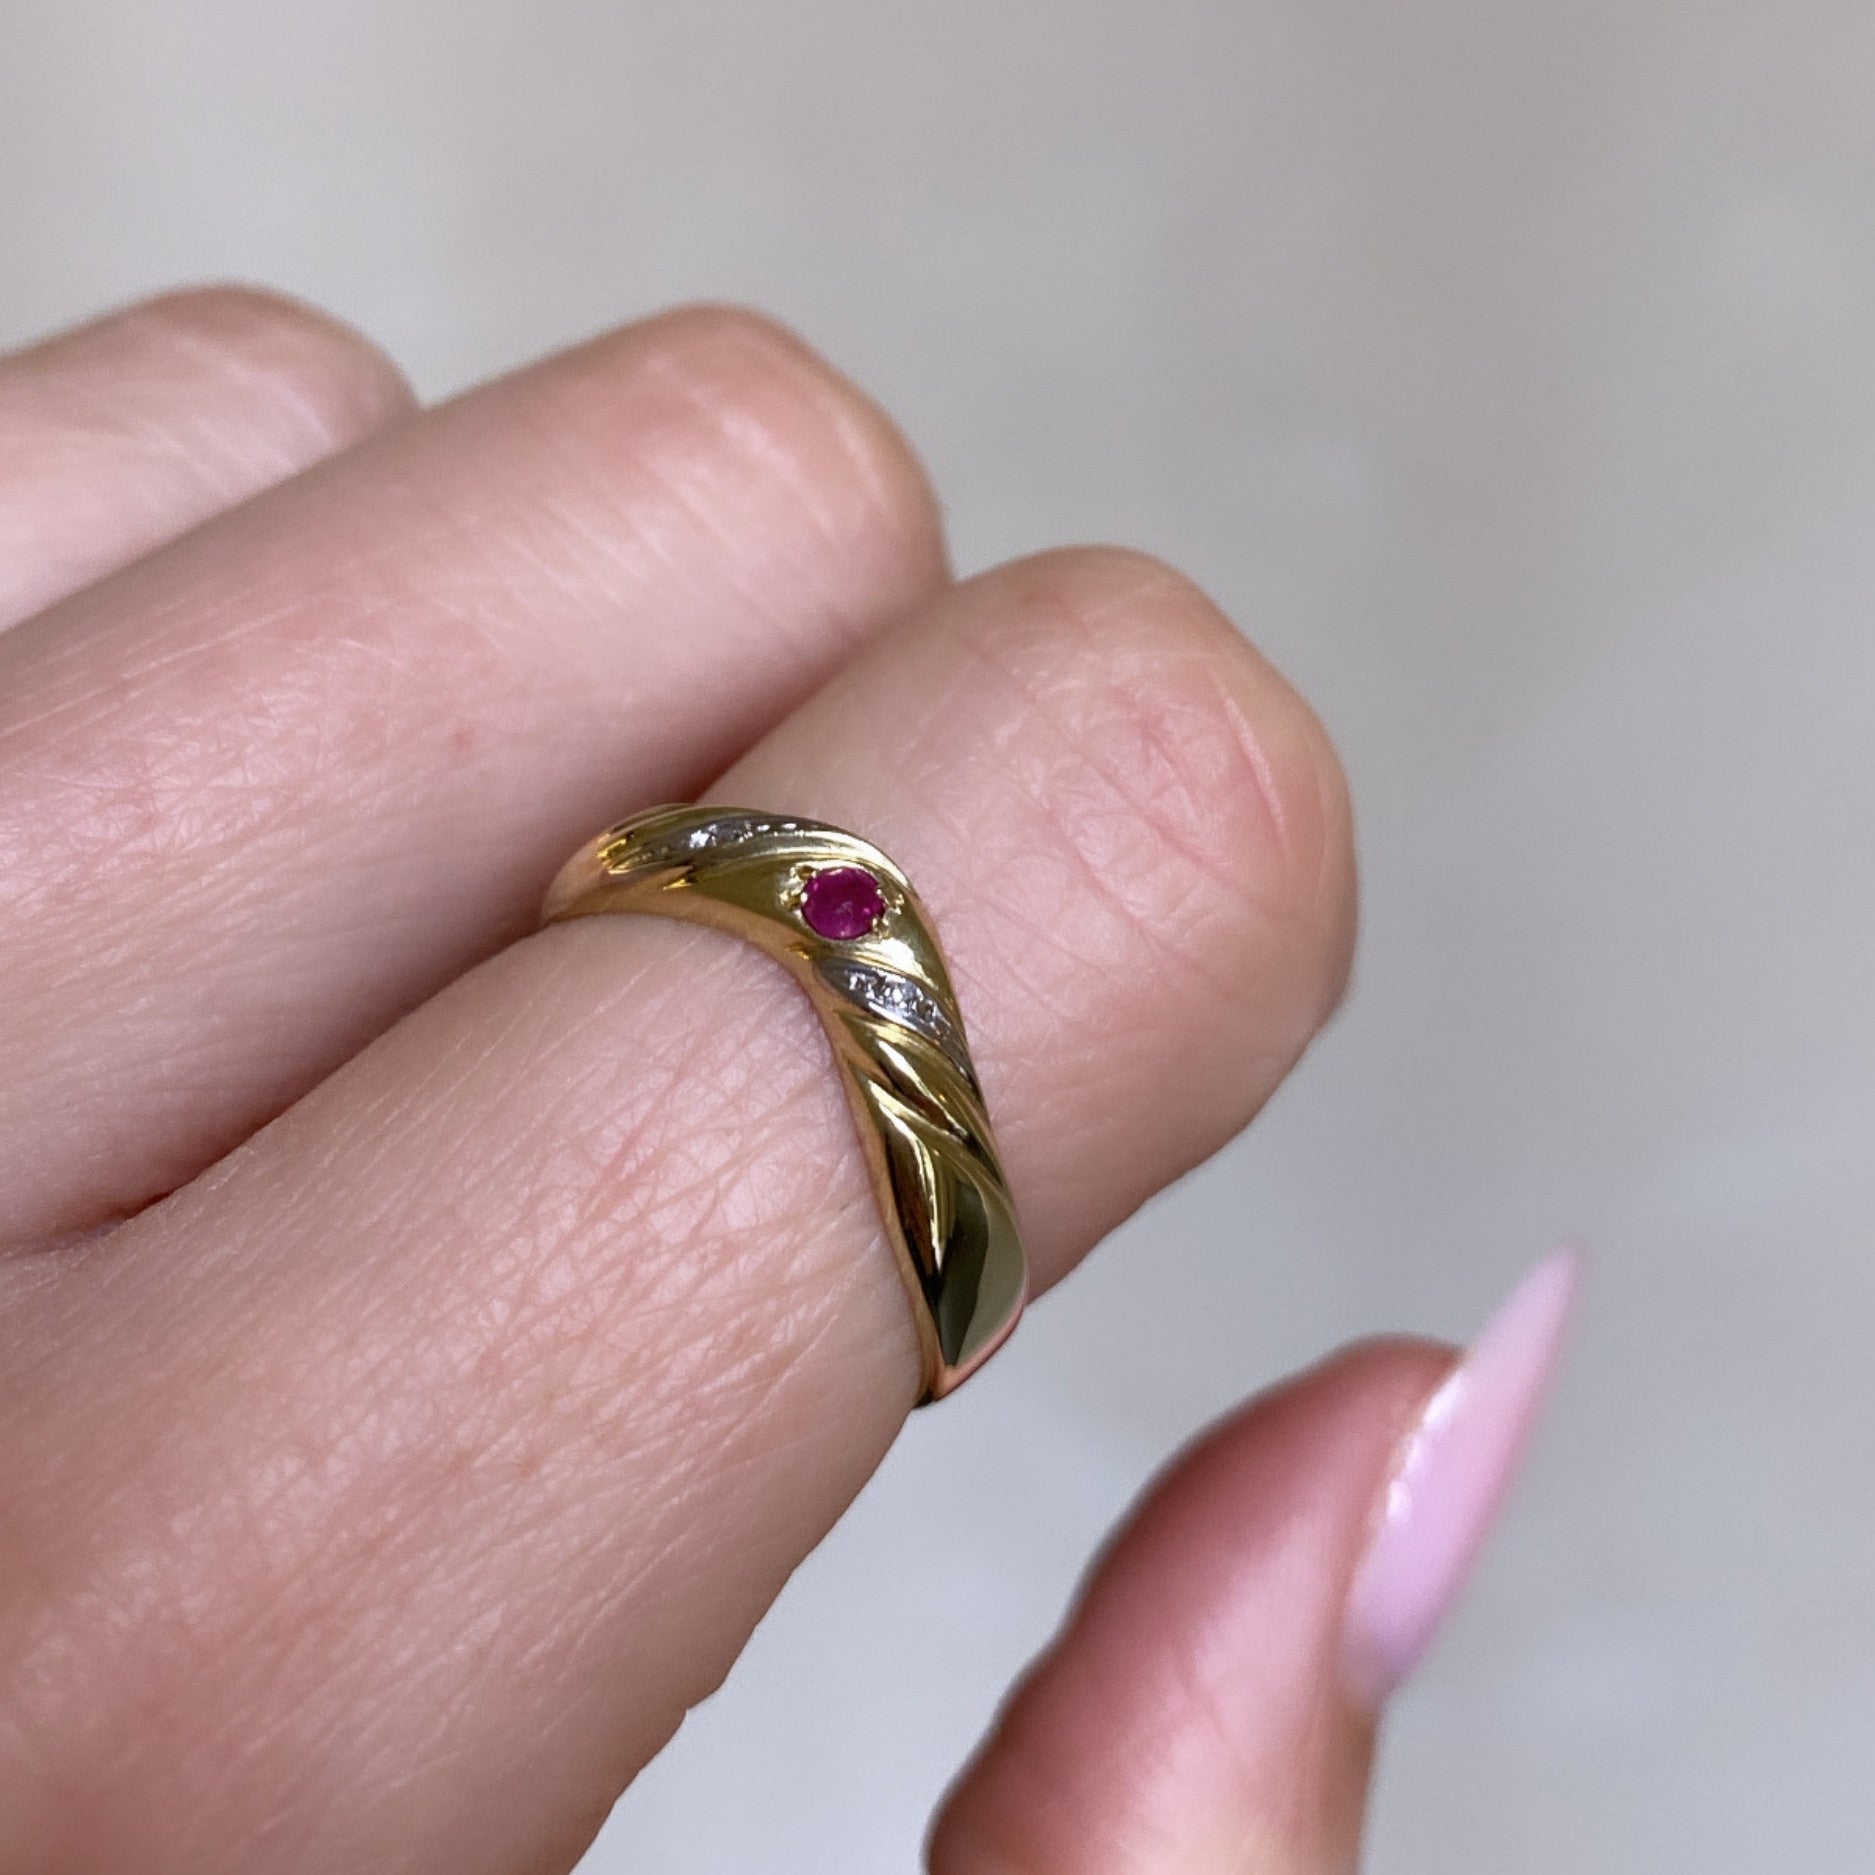 Vintage Pink Sapphire Ring